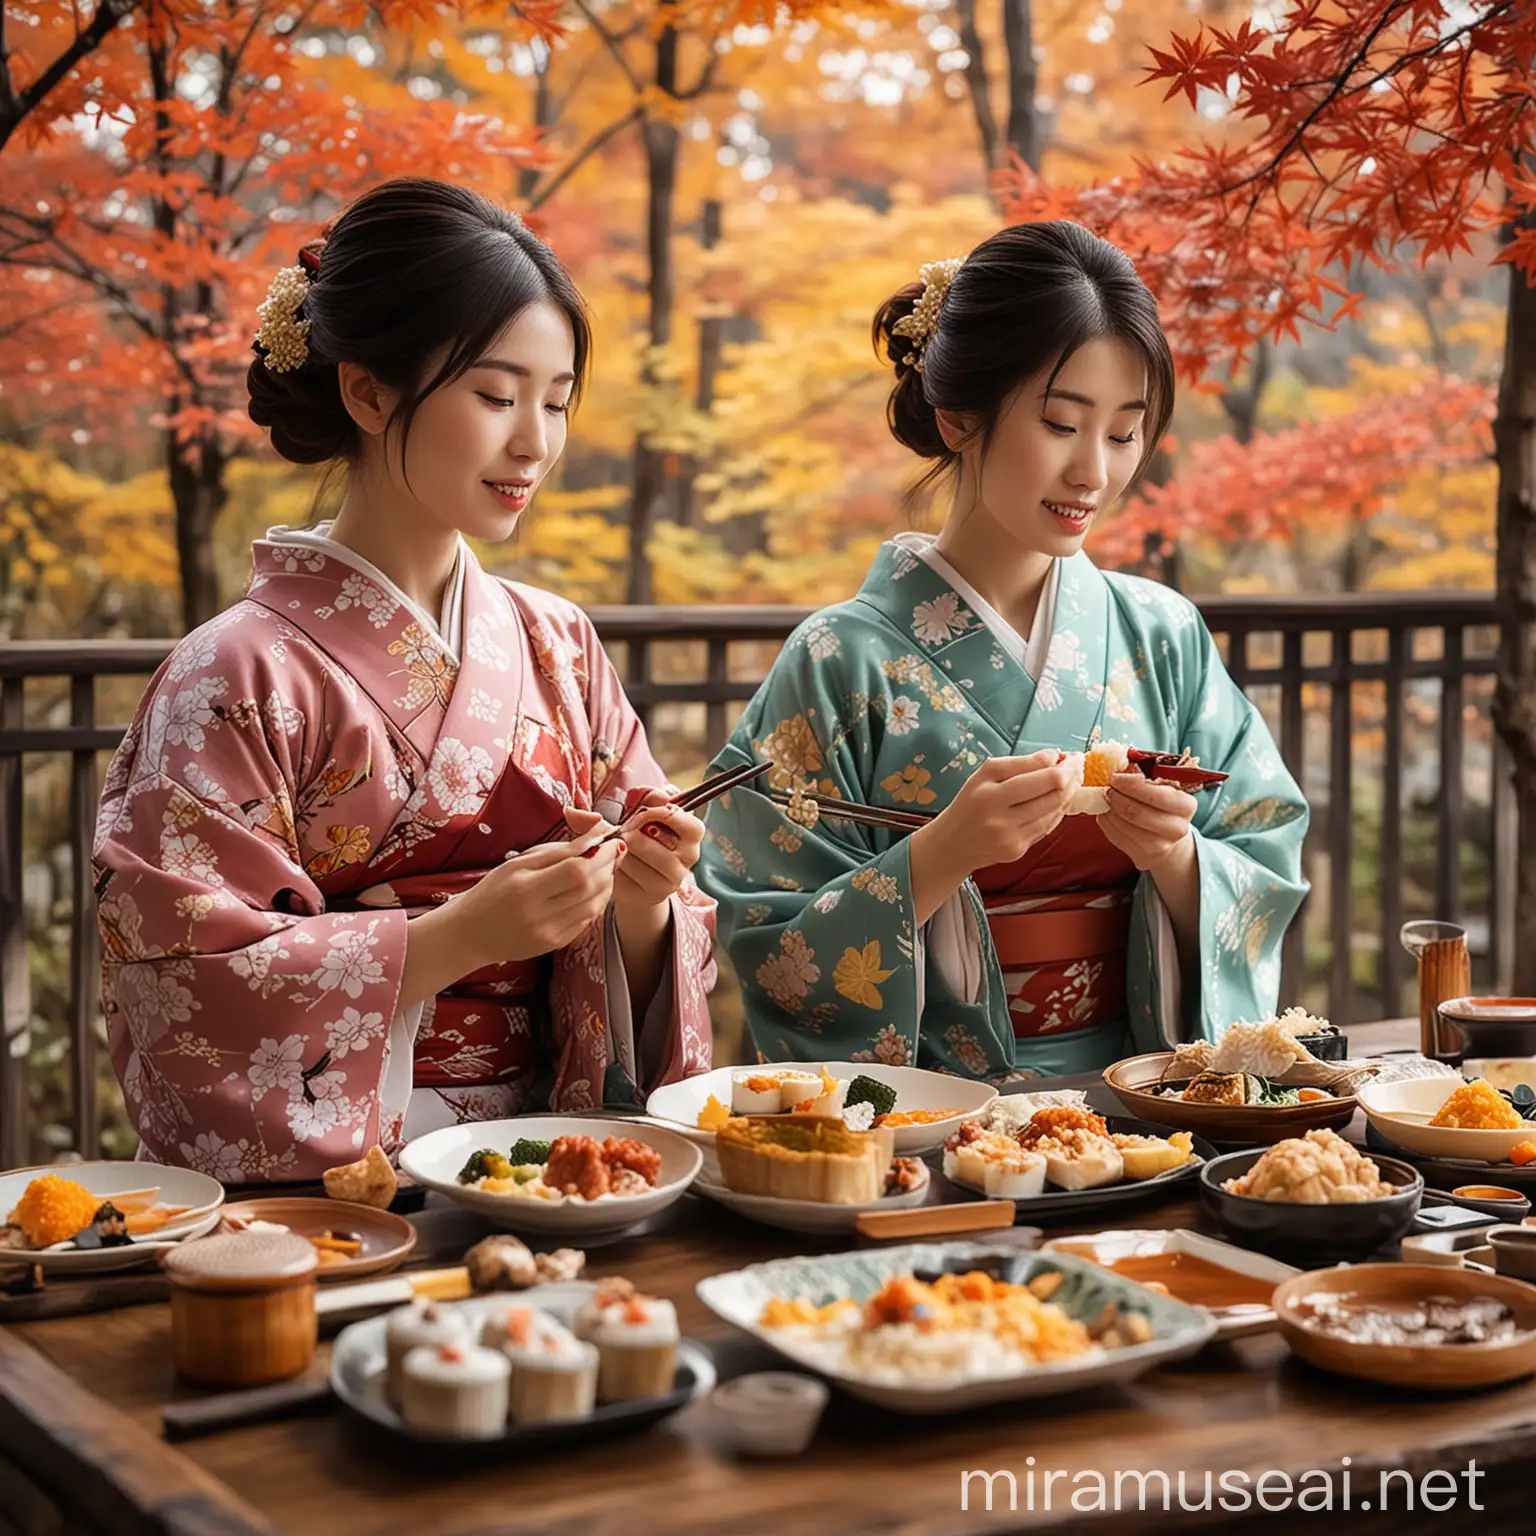 Japanese Women in Kimono Enjoying Autumn Cuisine